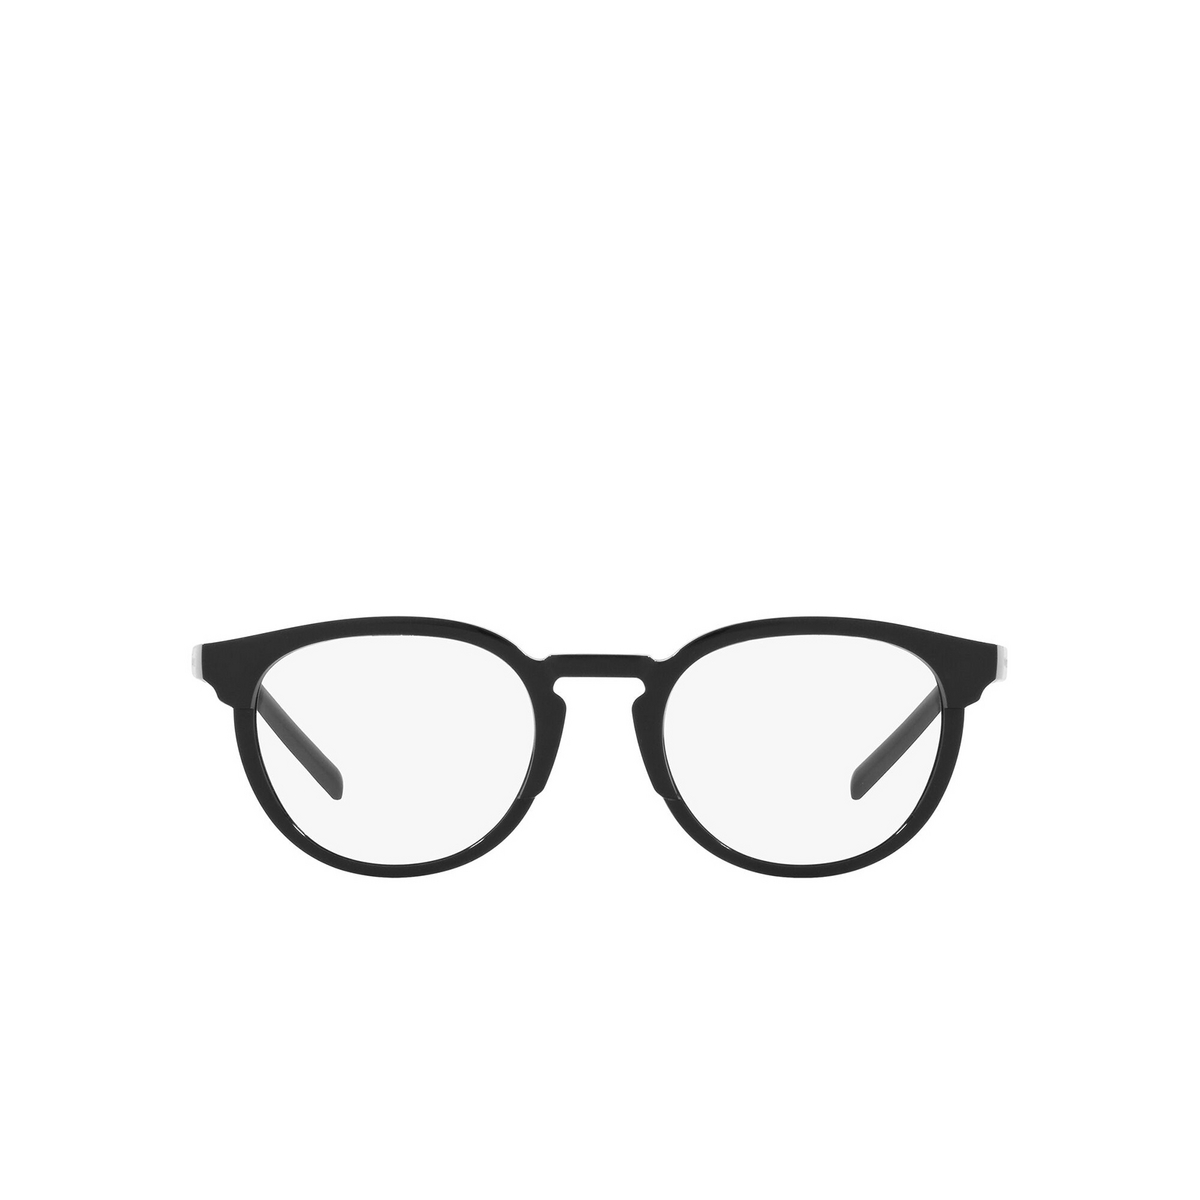 Dolce & Gabbana® Round Eyeglasses: DG5067 color Black 501 - front view.